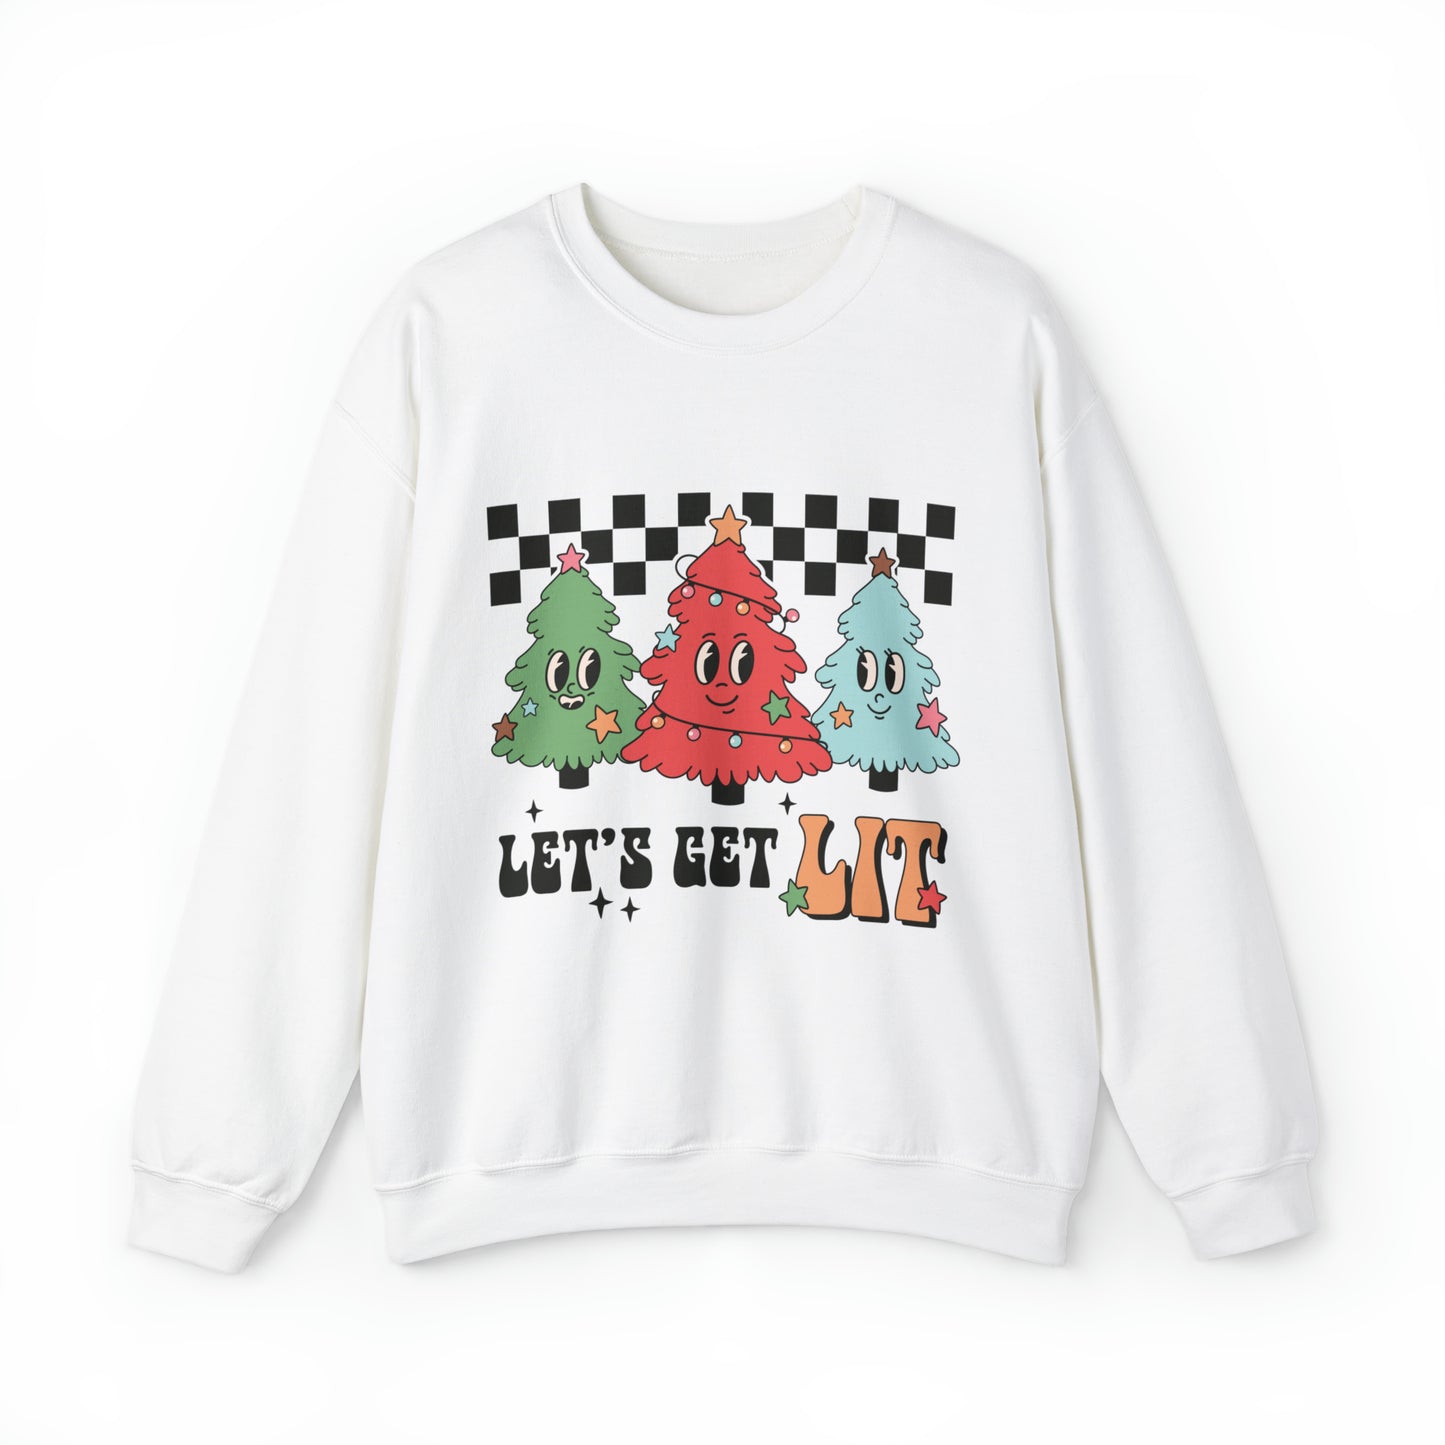 Let's get lit Christmas Tree Funny Adult Crewneck Sweatshirt